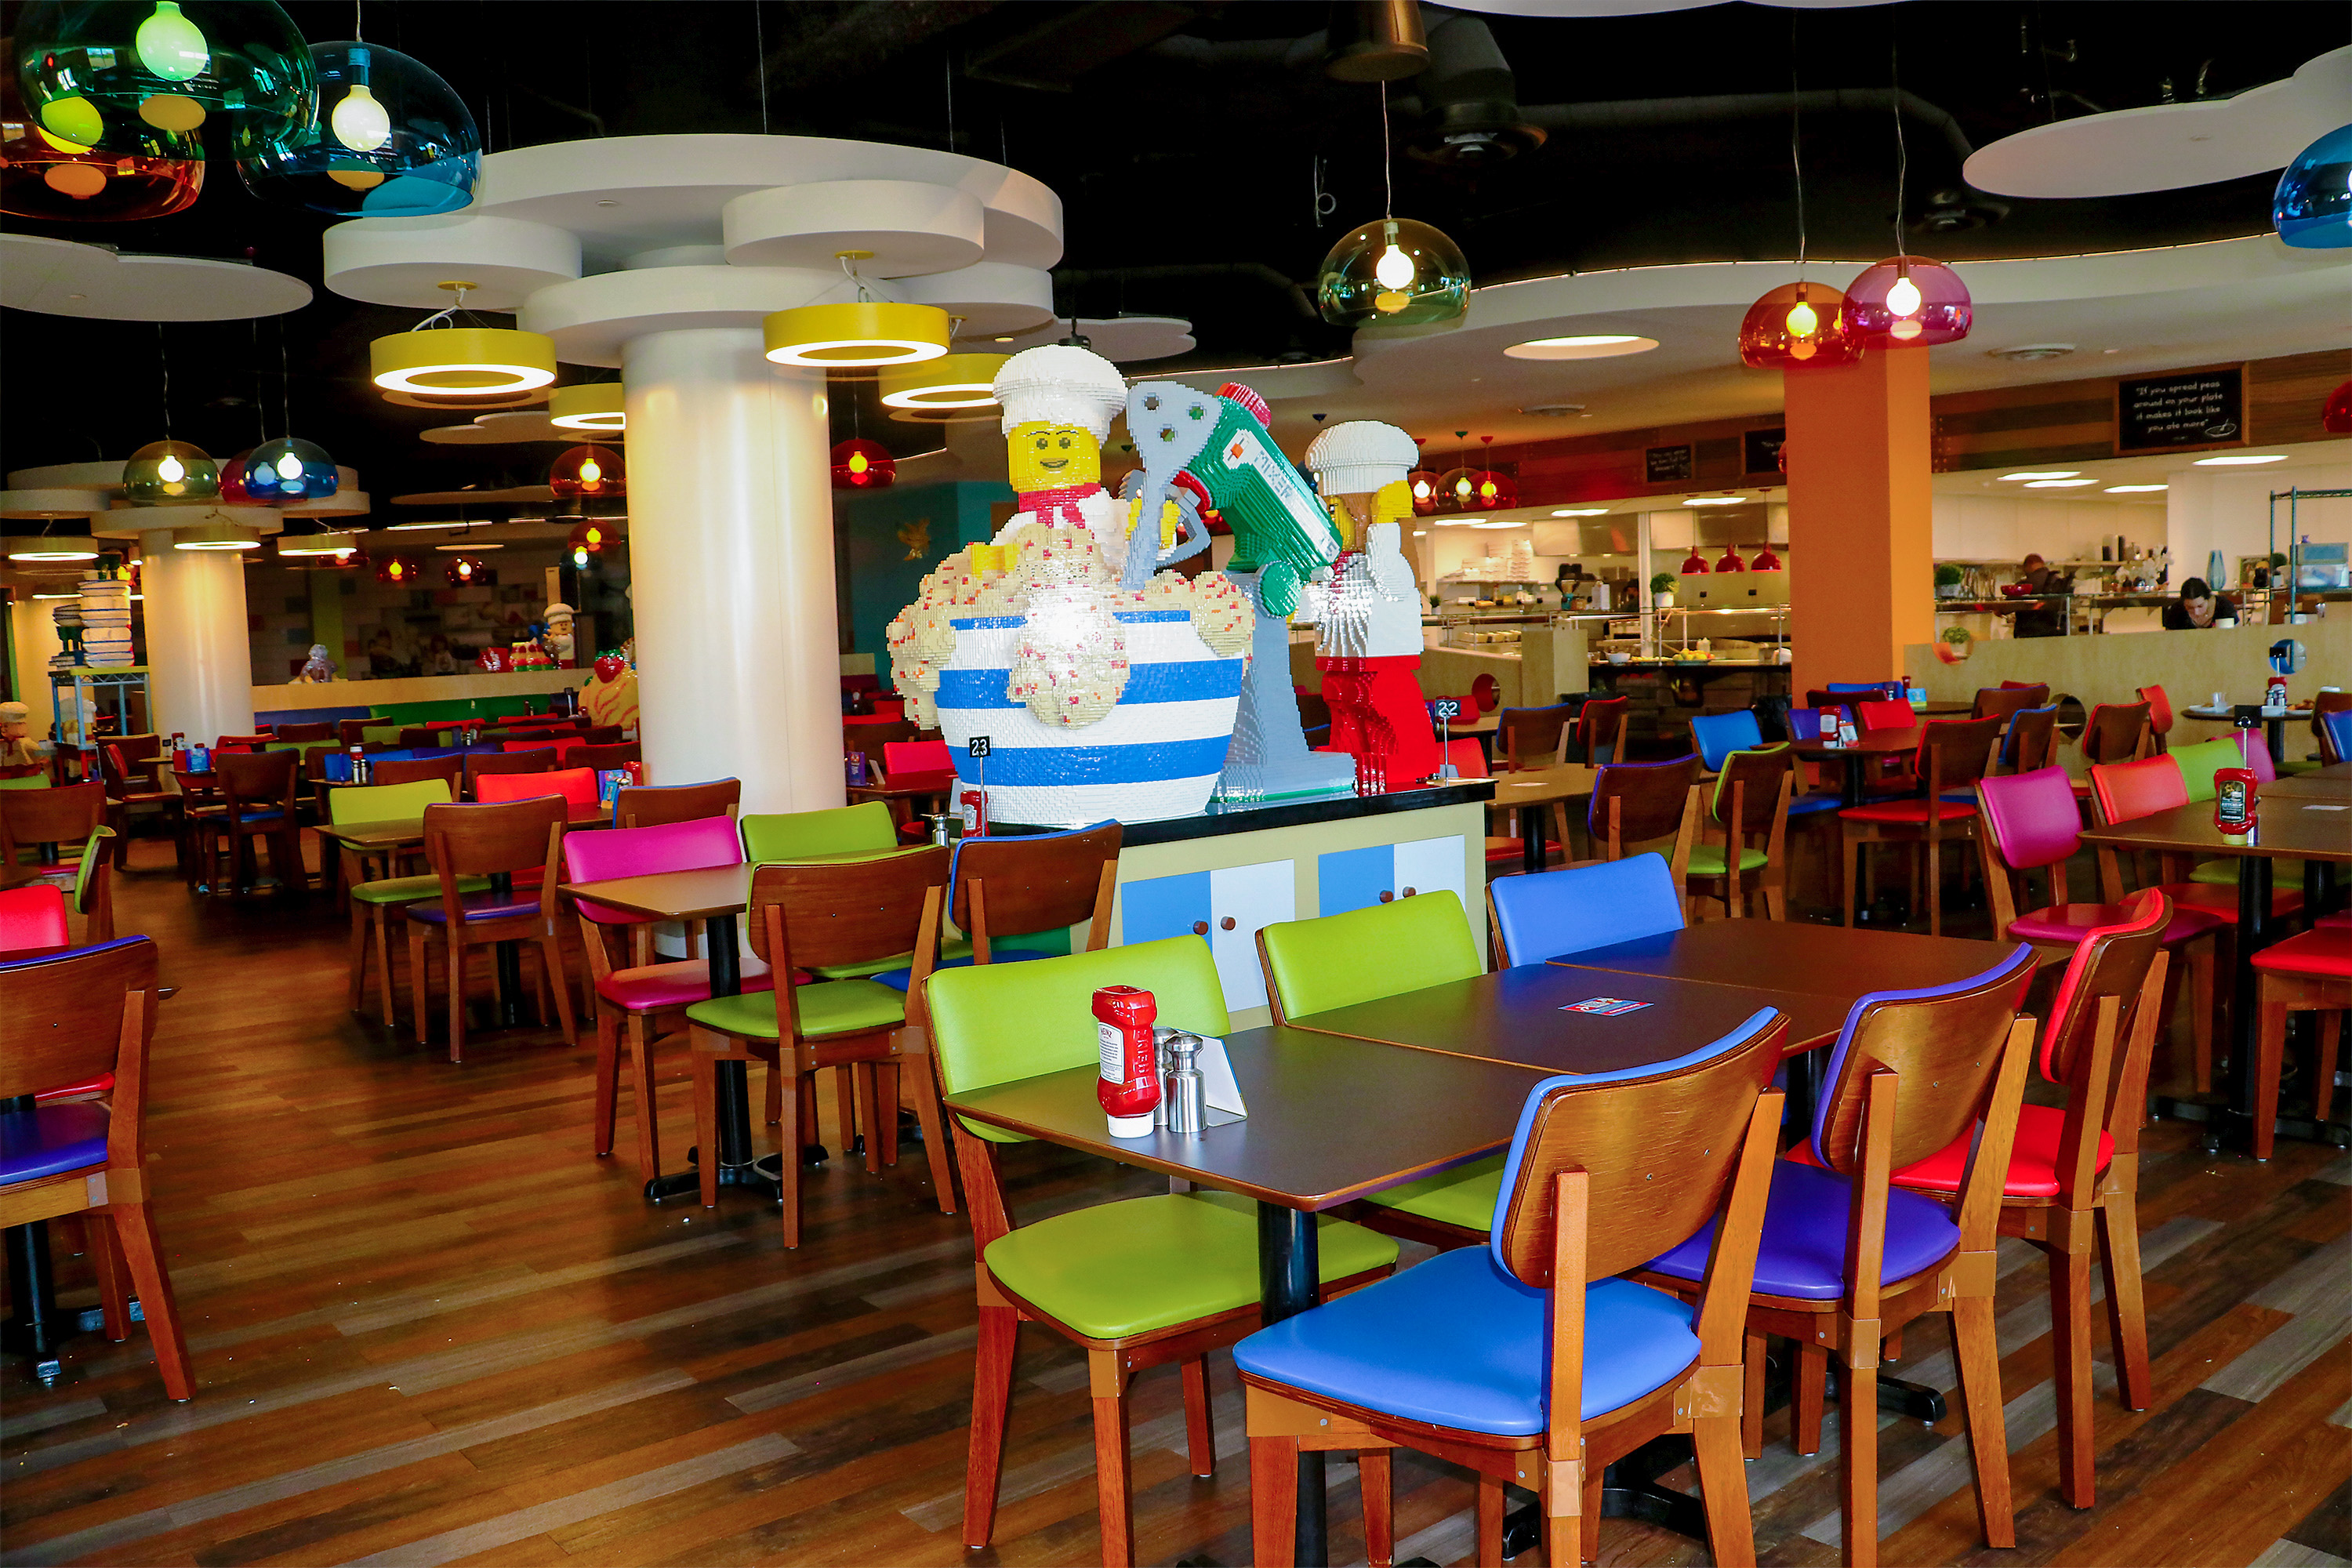 Enjoy a meal at Bricks Restaurant inside the LEGOLAND Hotel